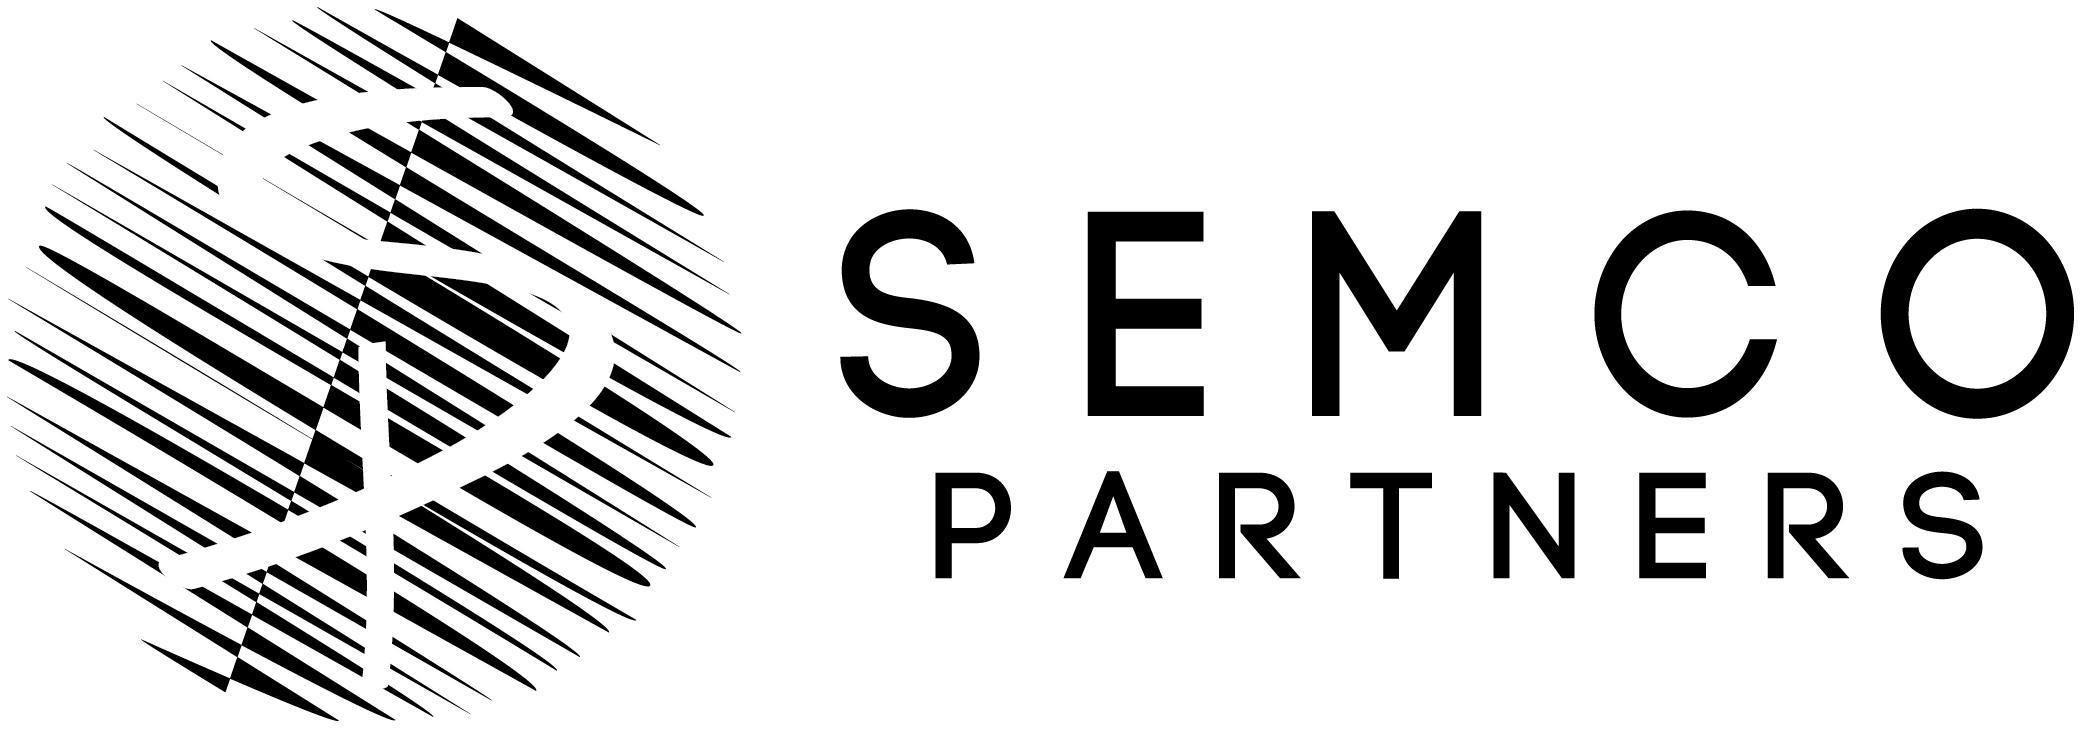 Semco Logo - Semco Partners Competitors, Revenue and Employees - Owler Company ...